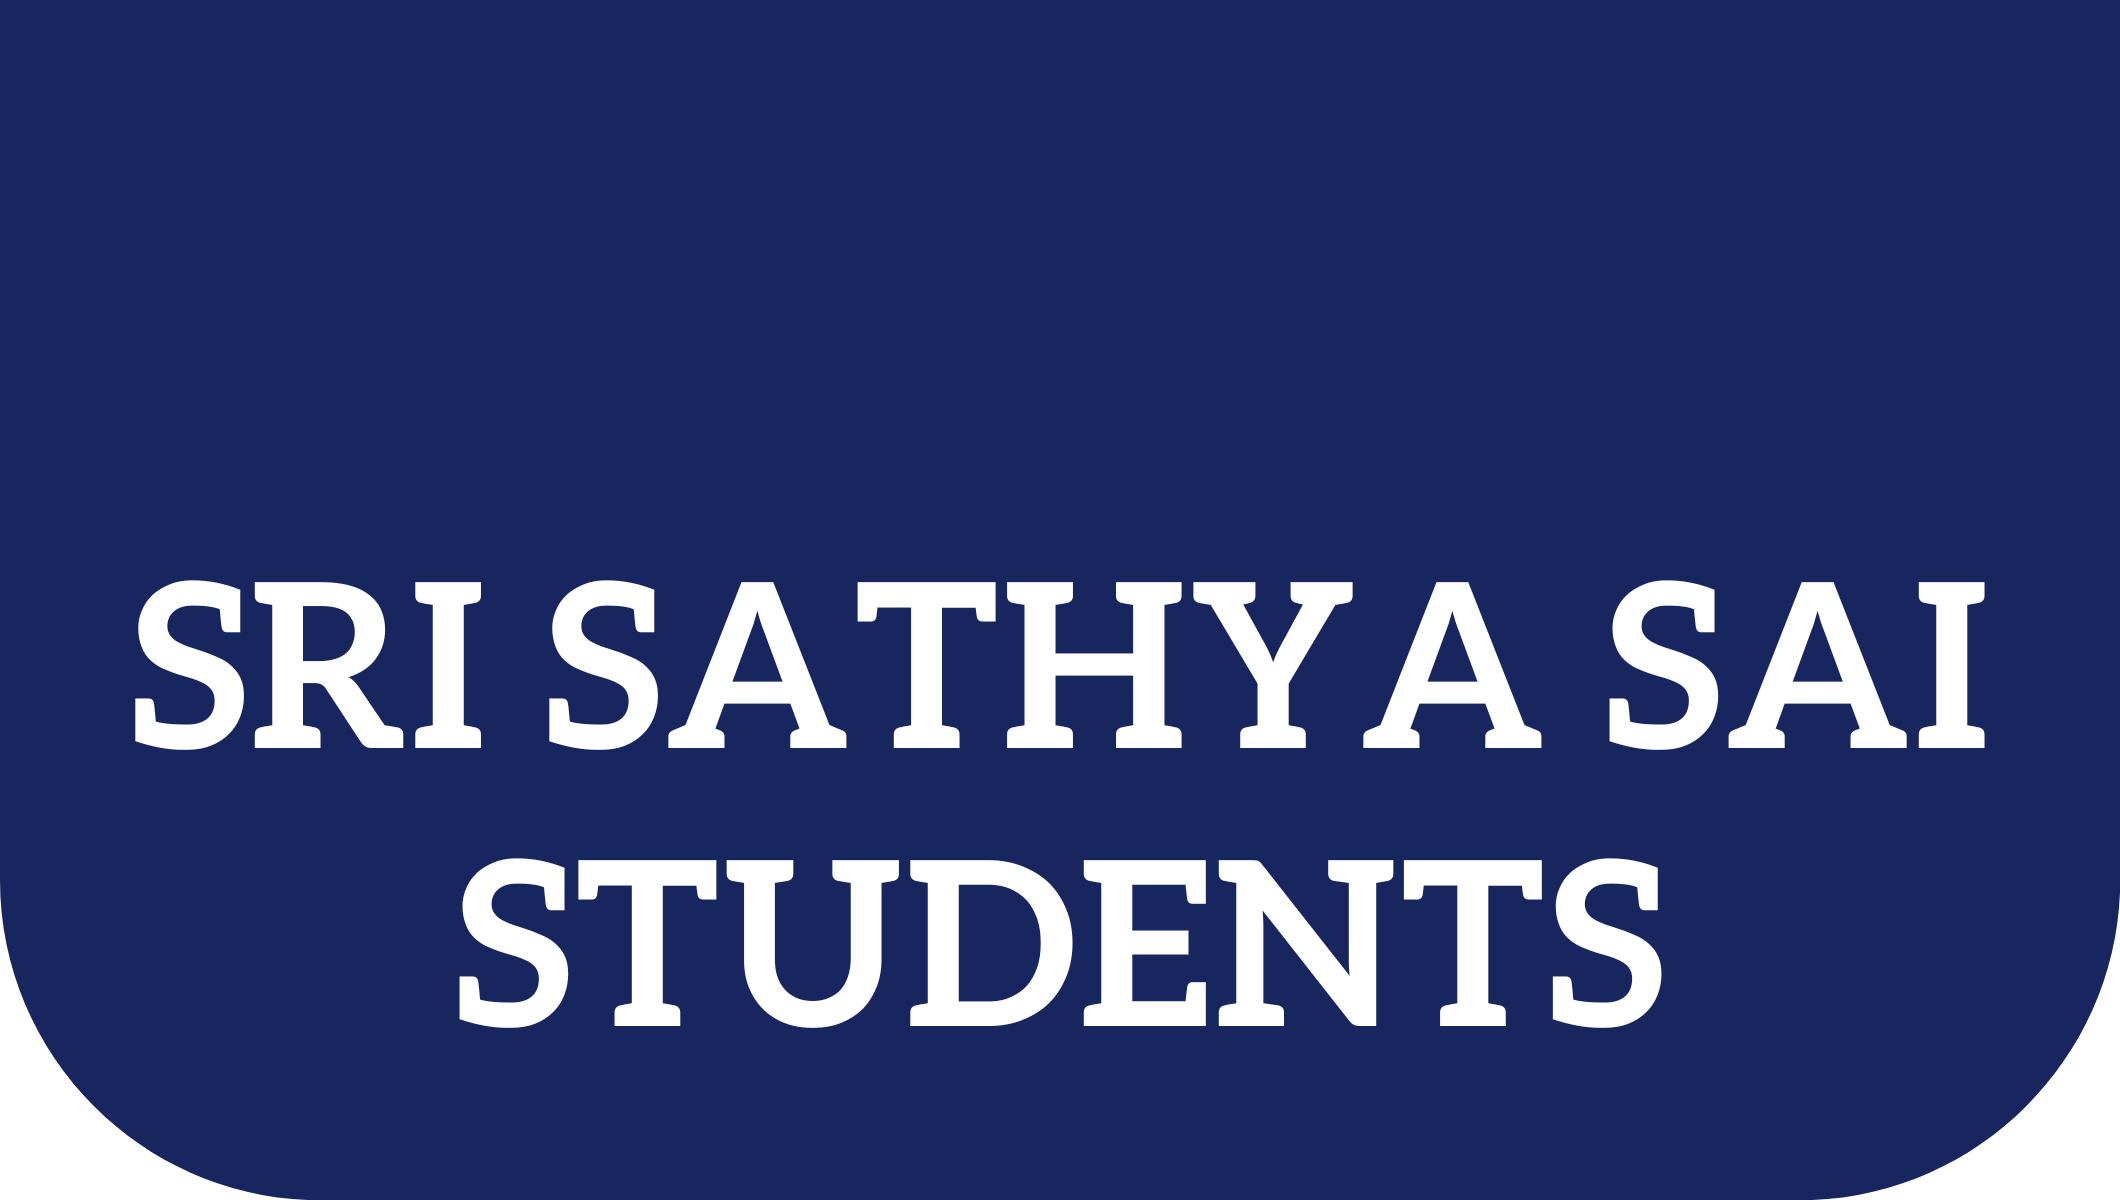 Sri Sathya Sai Students